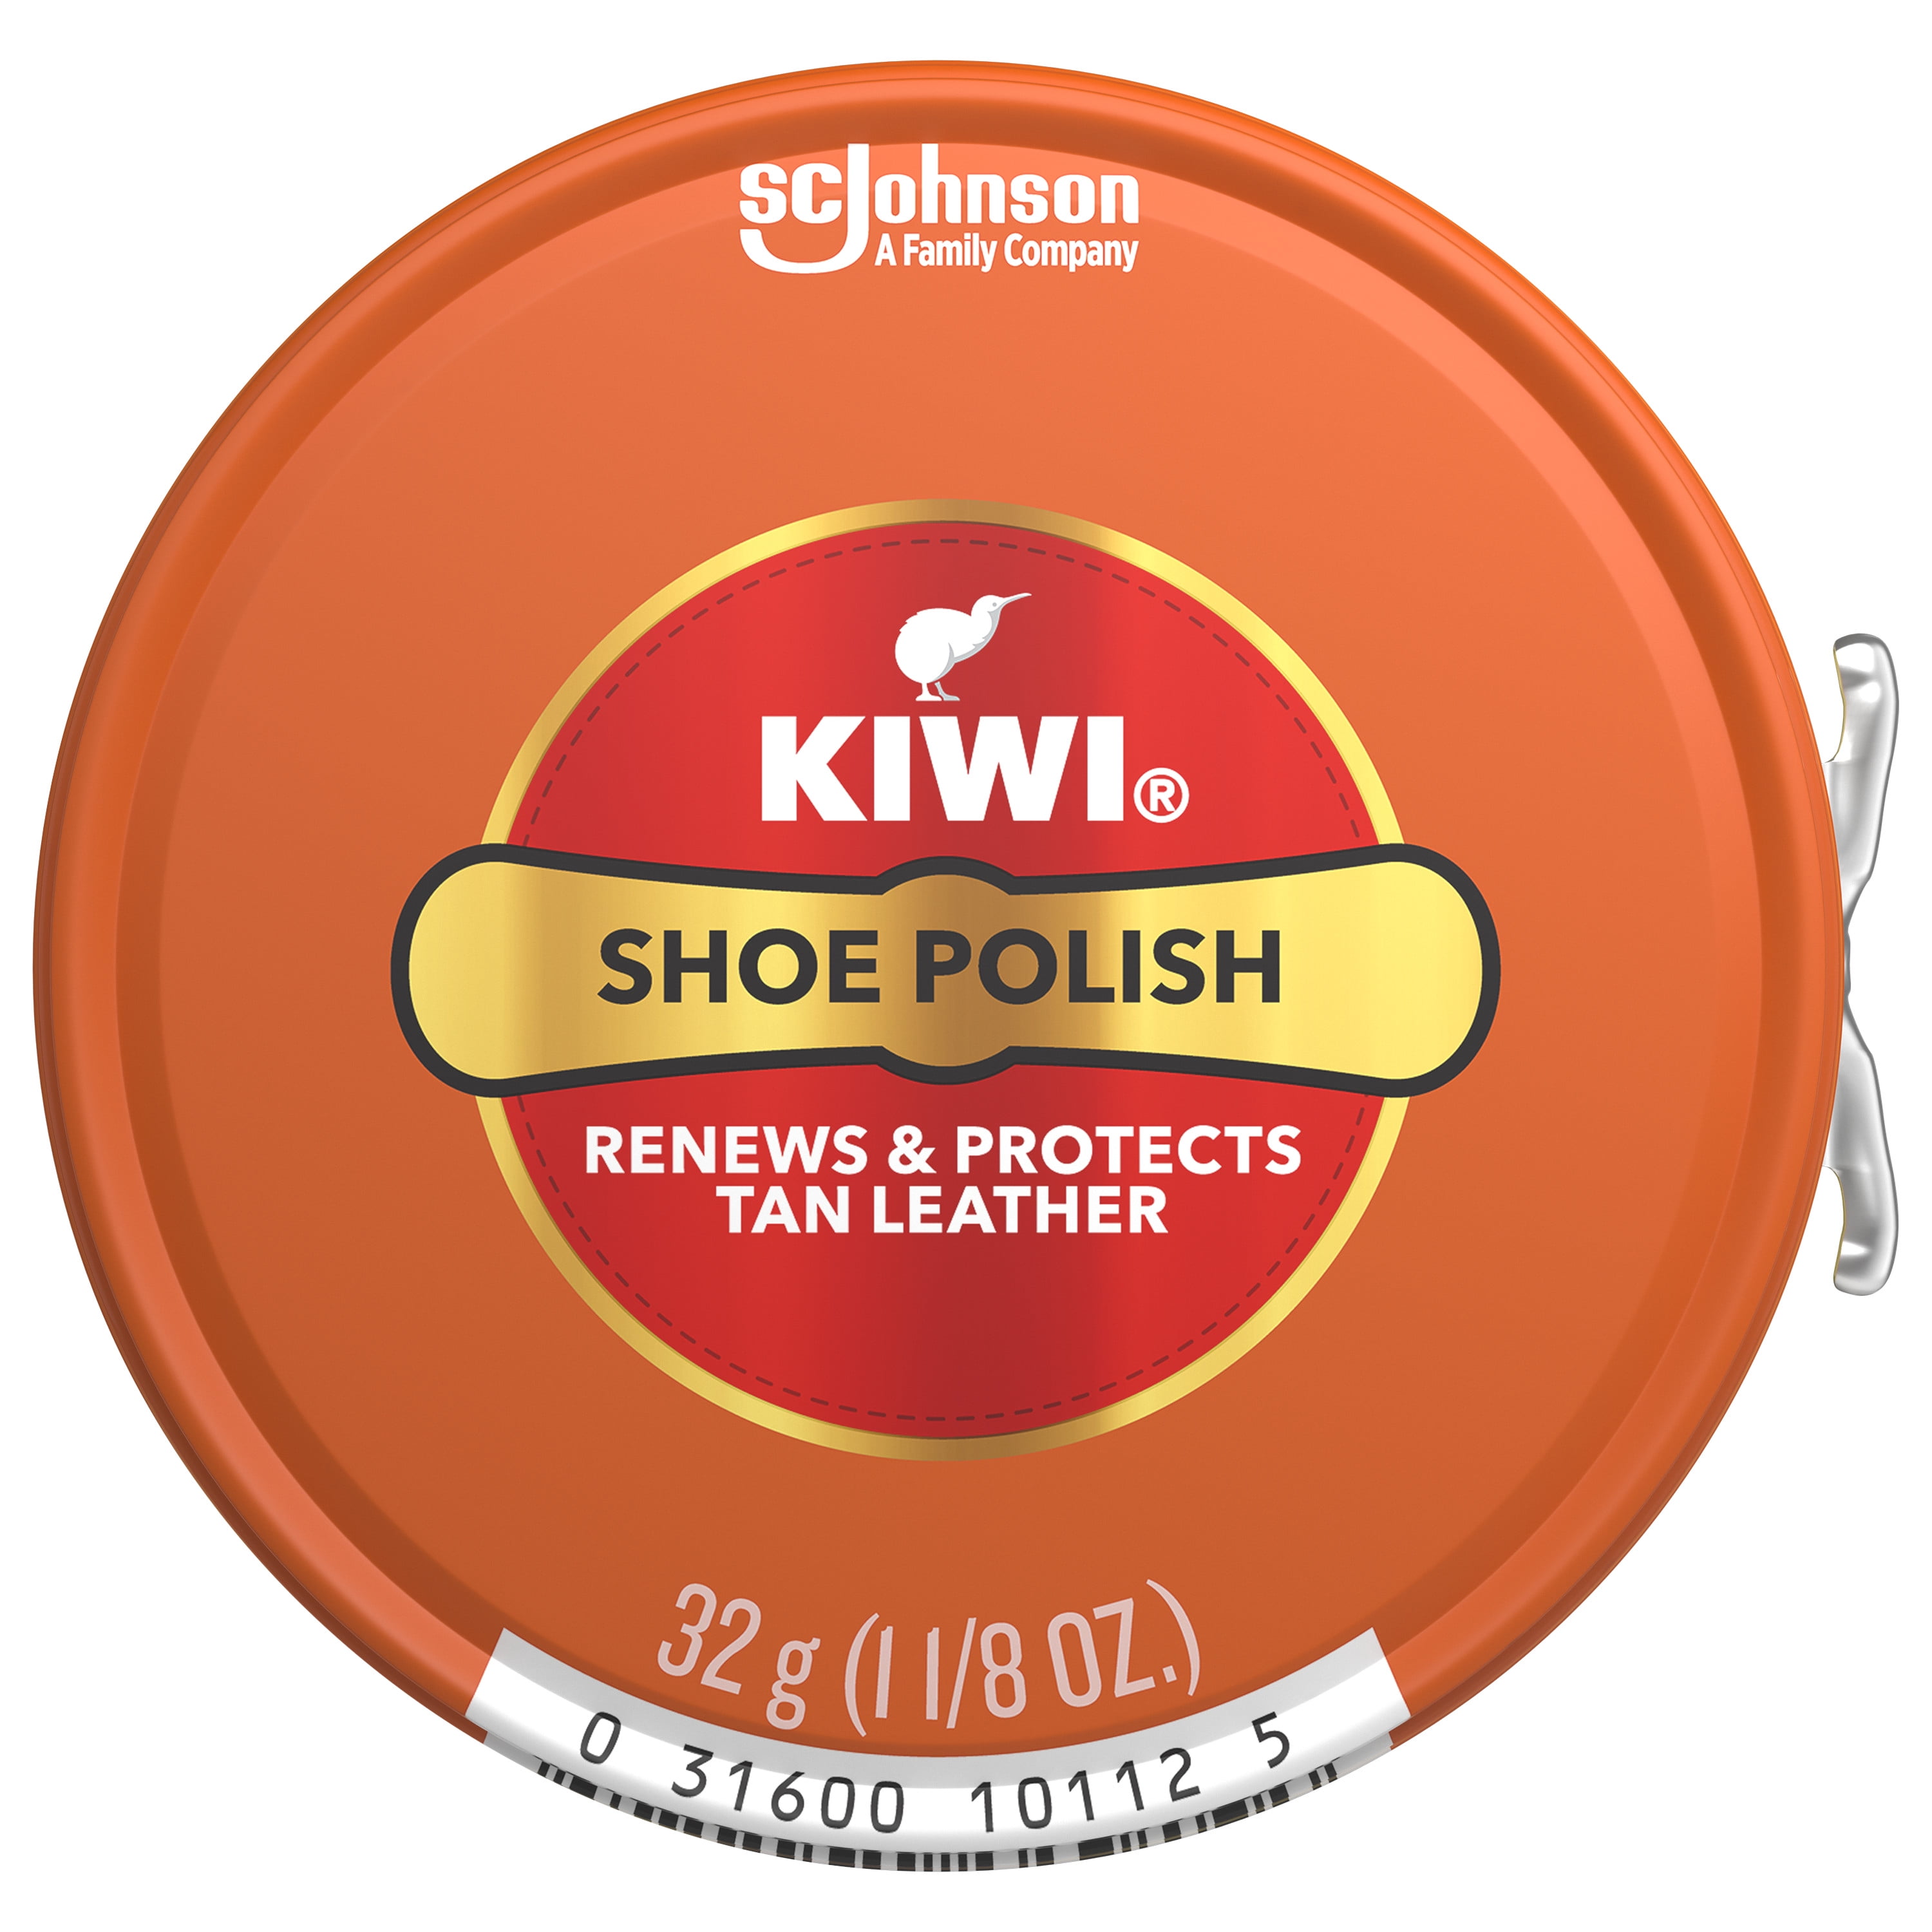 Pack of 1 Kiwi Shoe Polish Paste 1.125 Ounce Mahogany